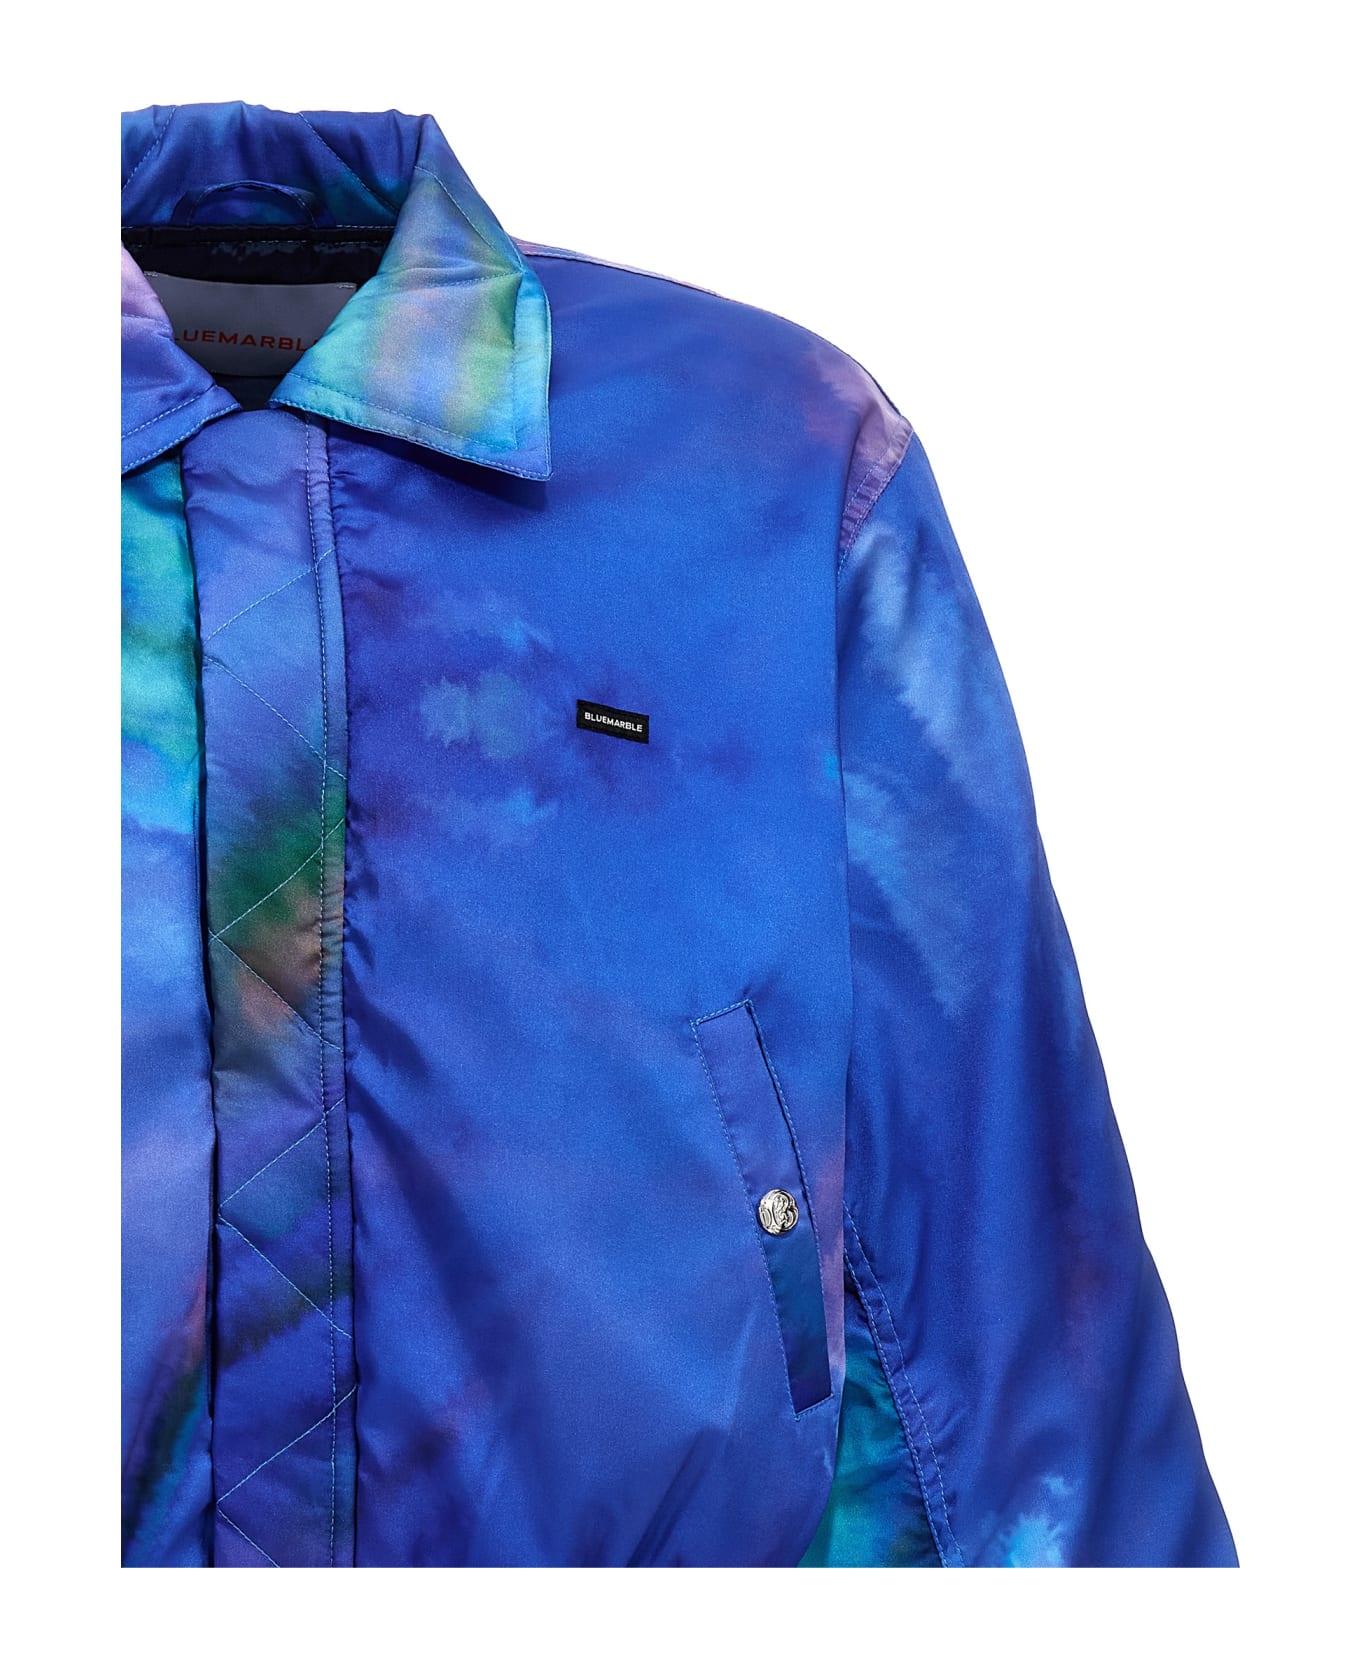 Bluemarble 'borealis Printed' Bomber Jacket - Multicolor ジャケット